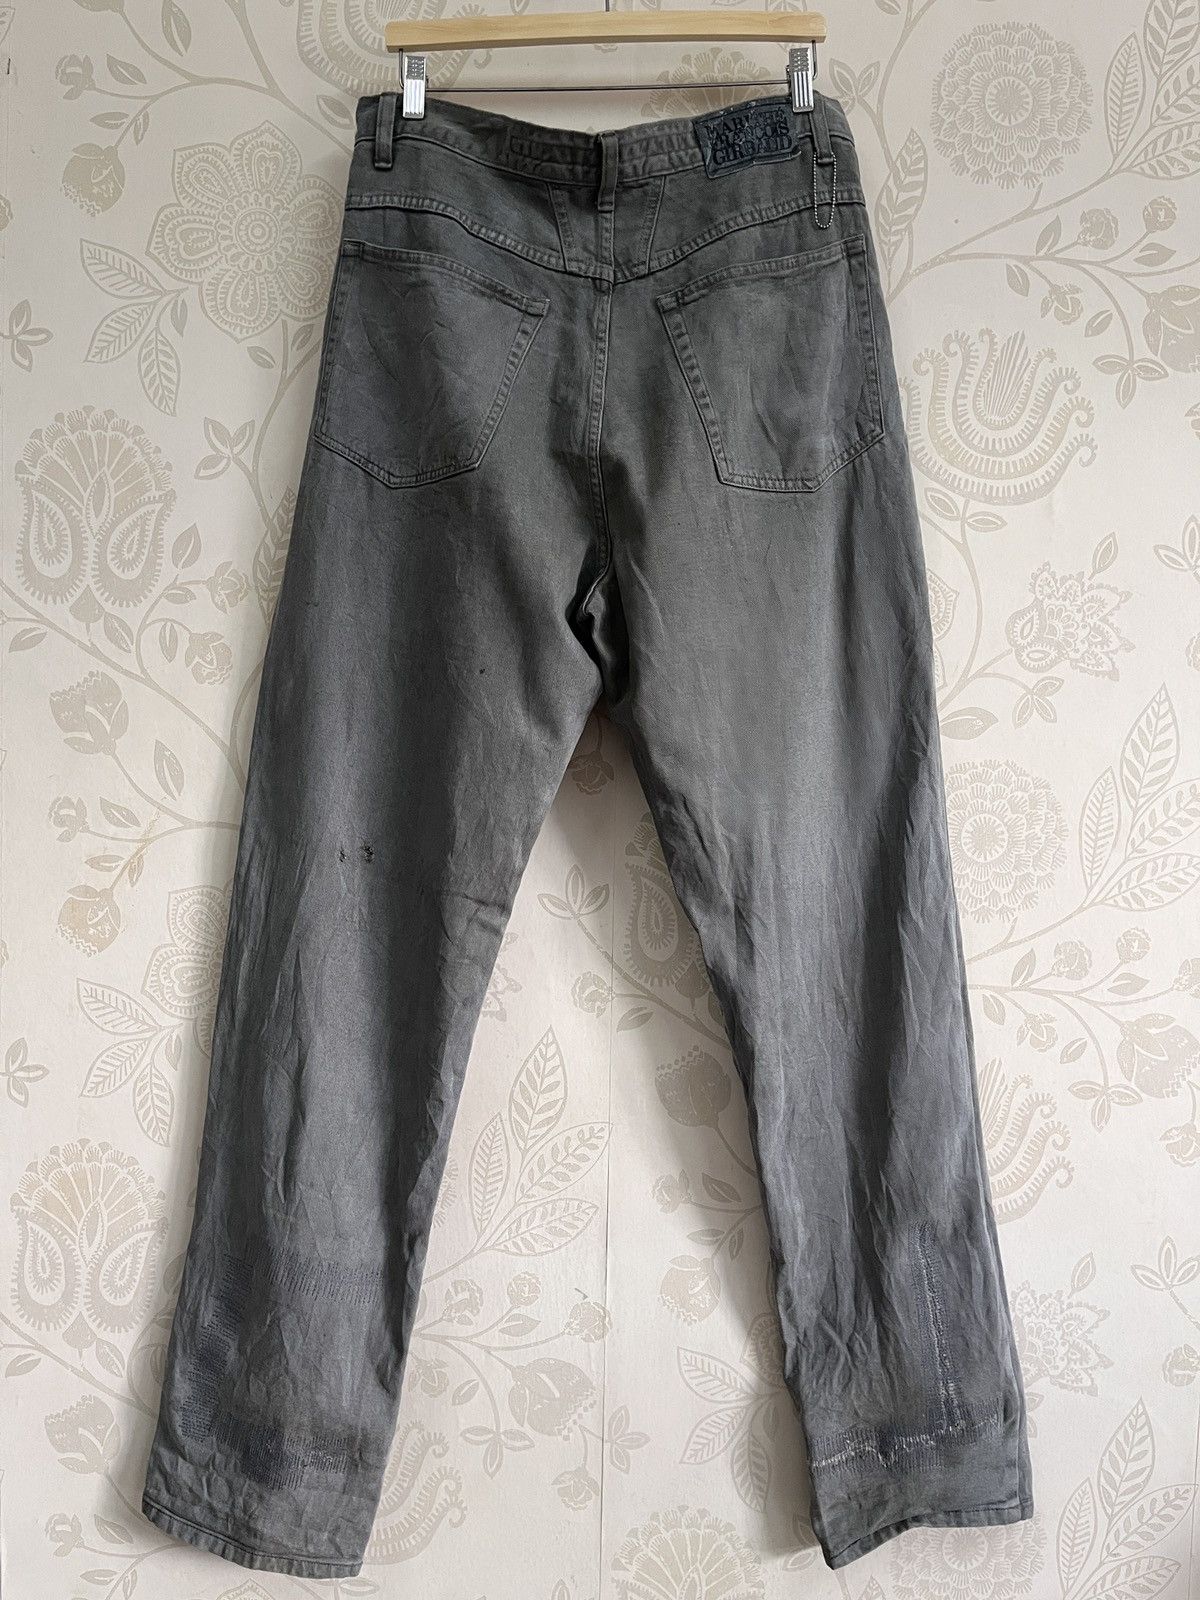 Vintage Marithe Francois Girbaud Distressed Denim Jeans - 22